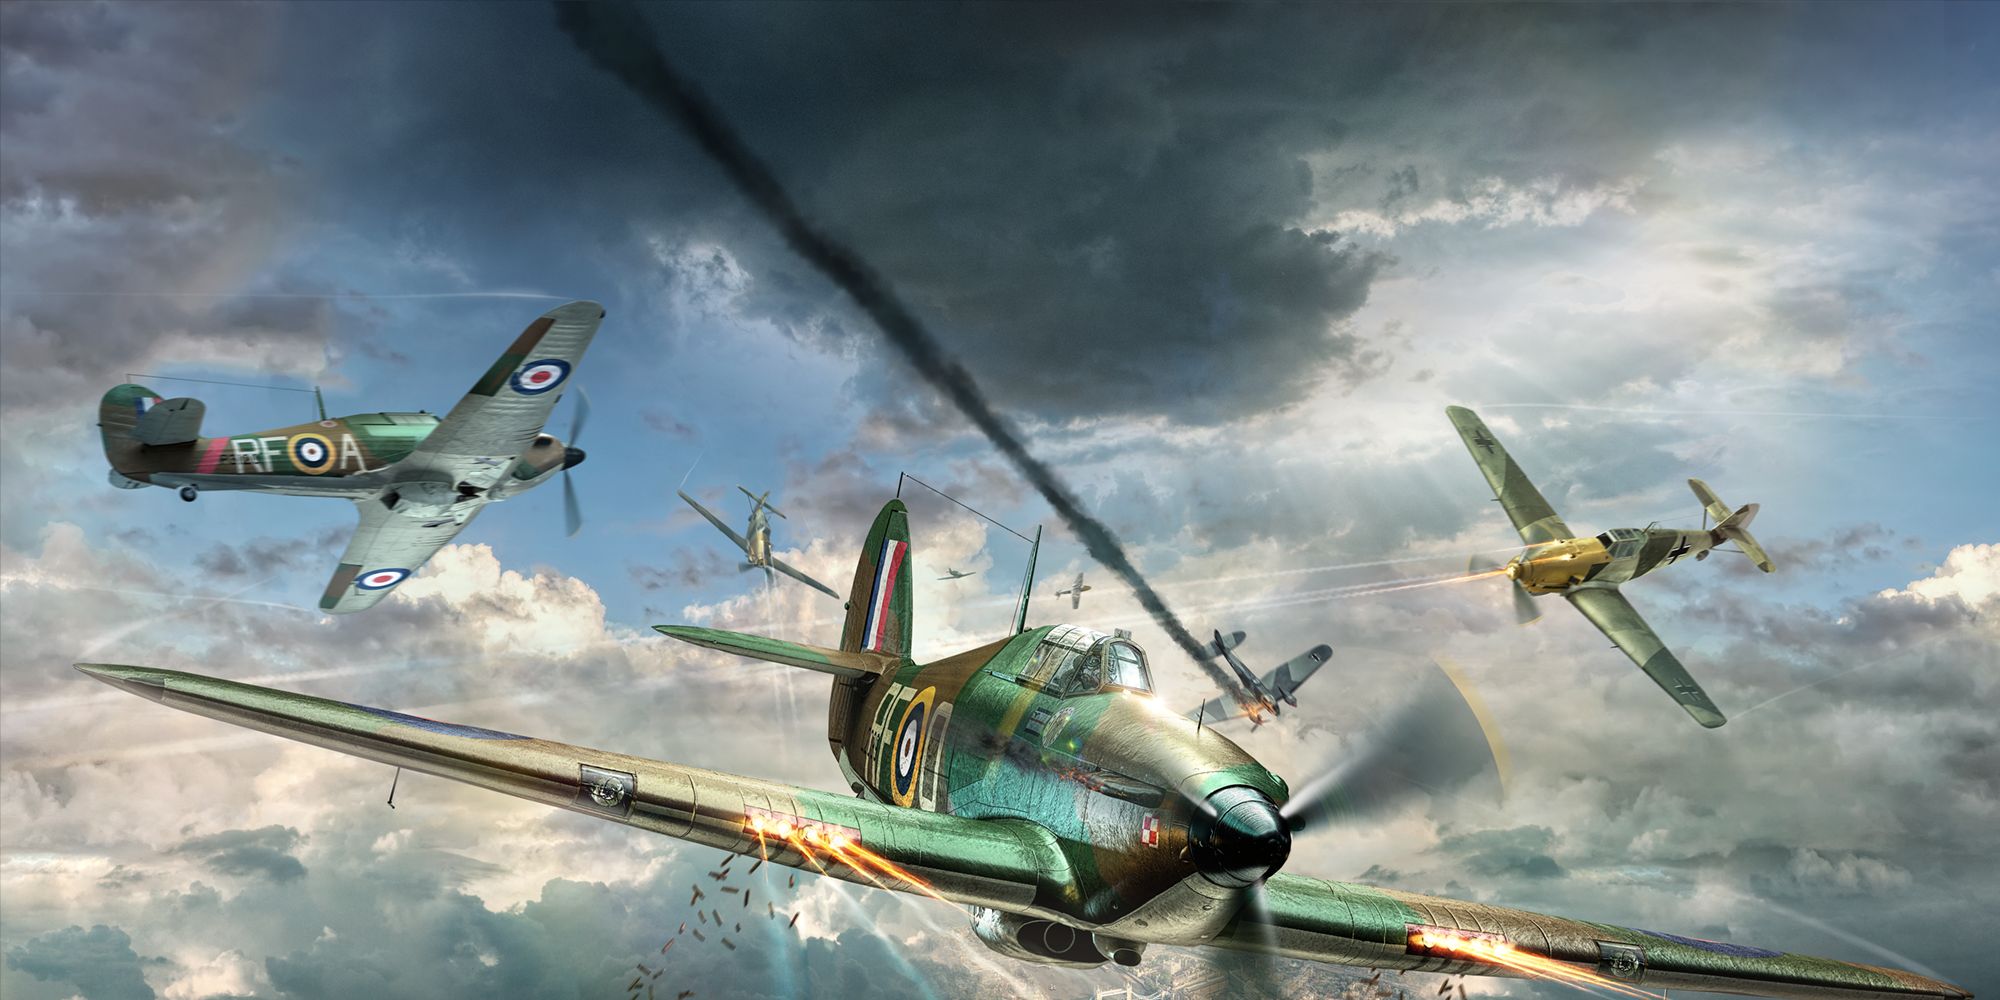 303 Squadron: Battle of Britain